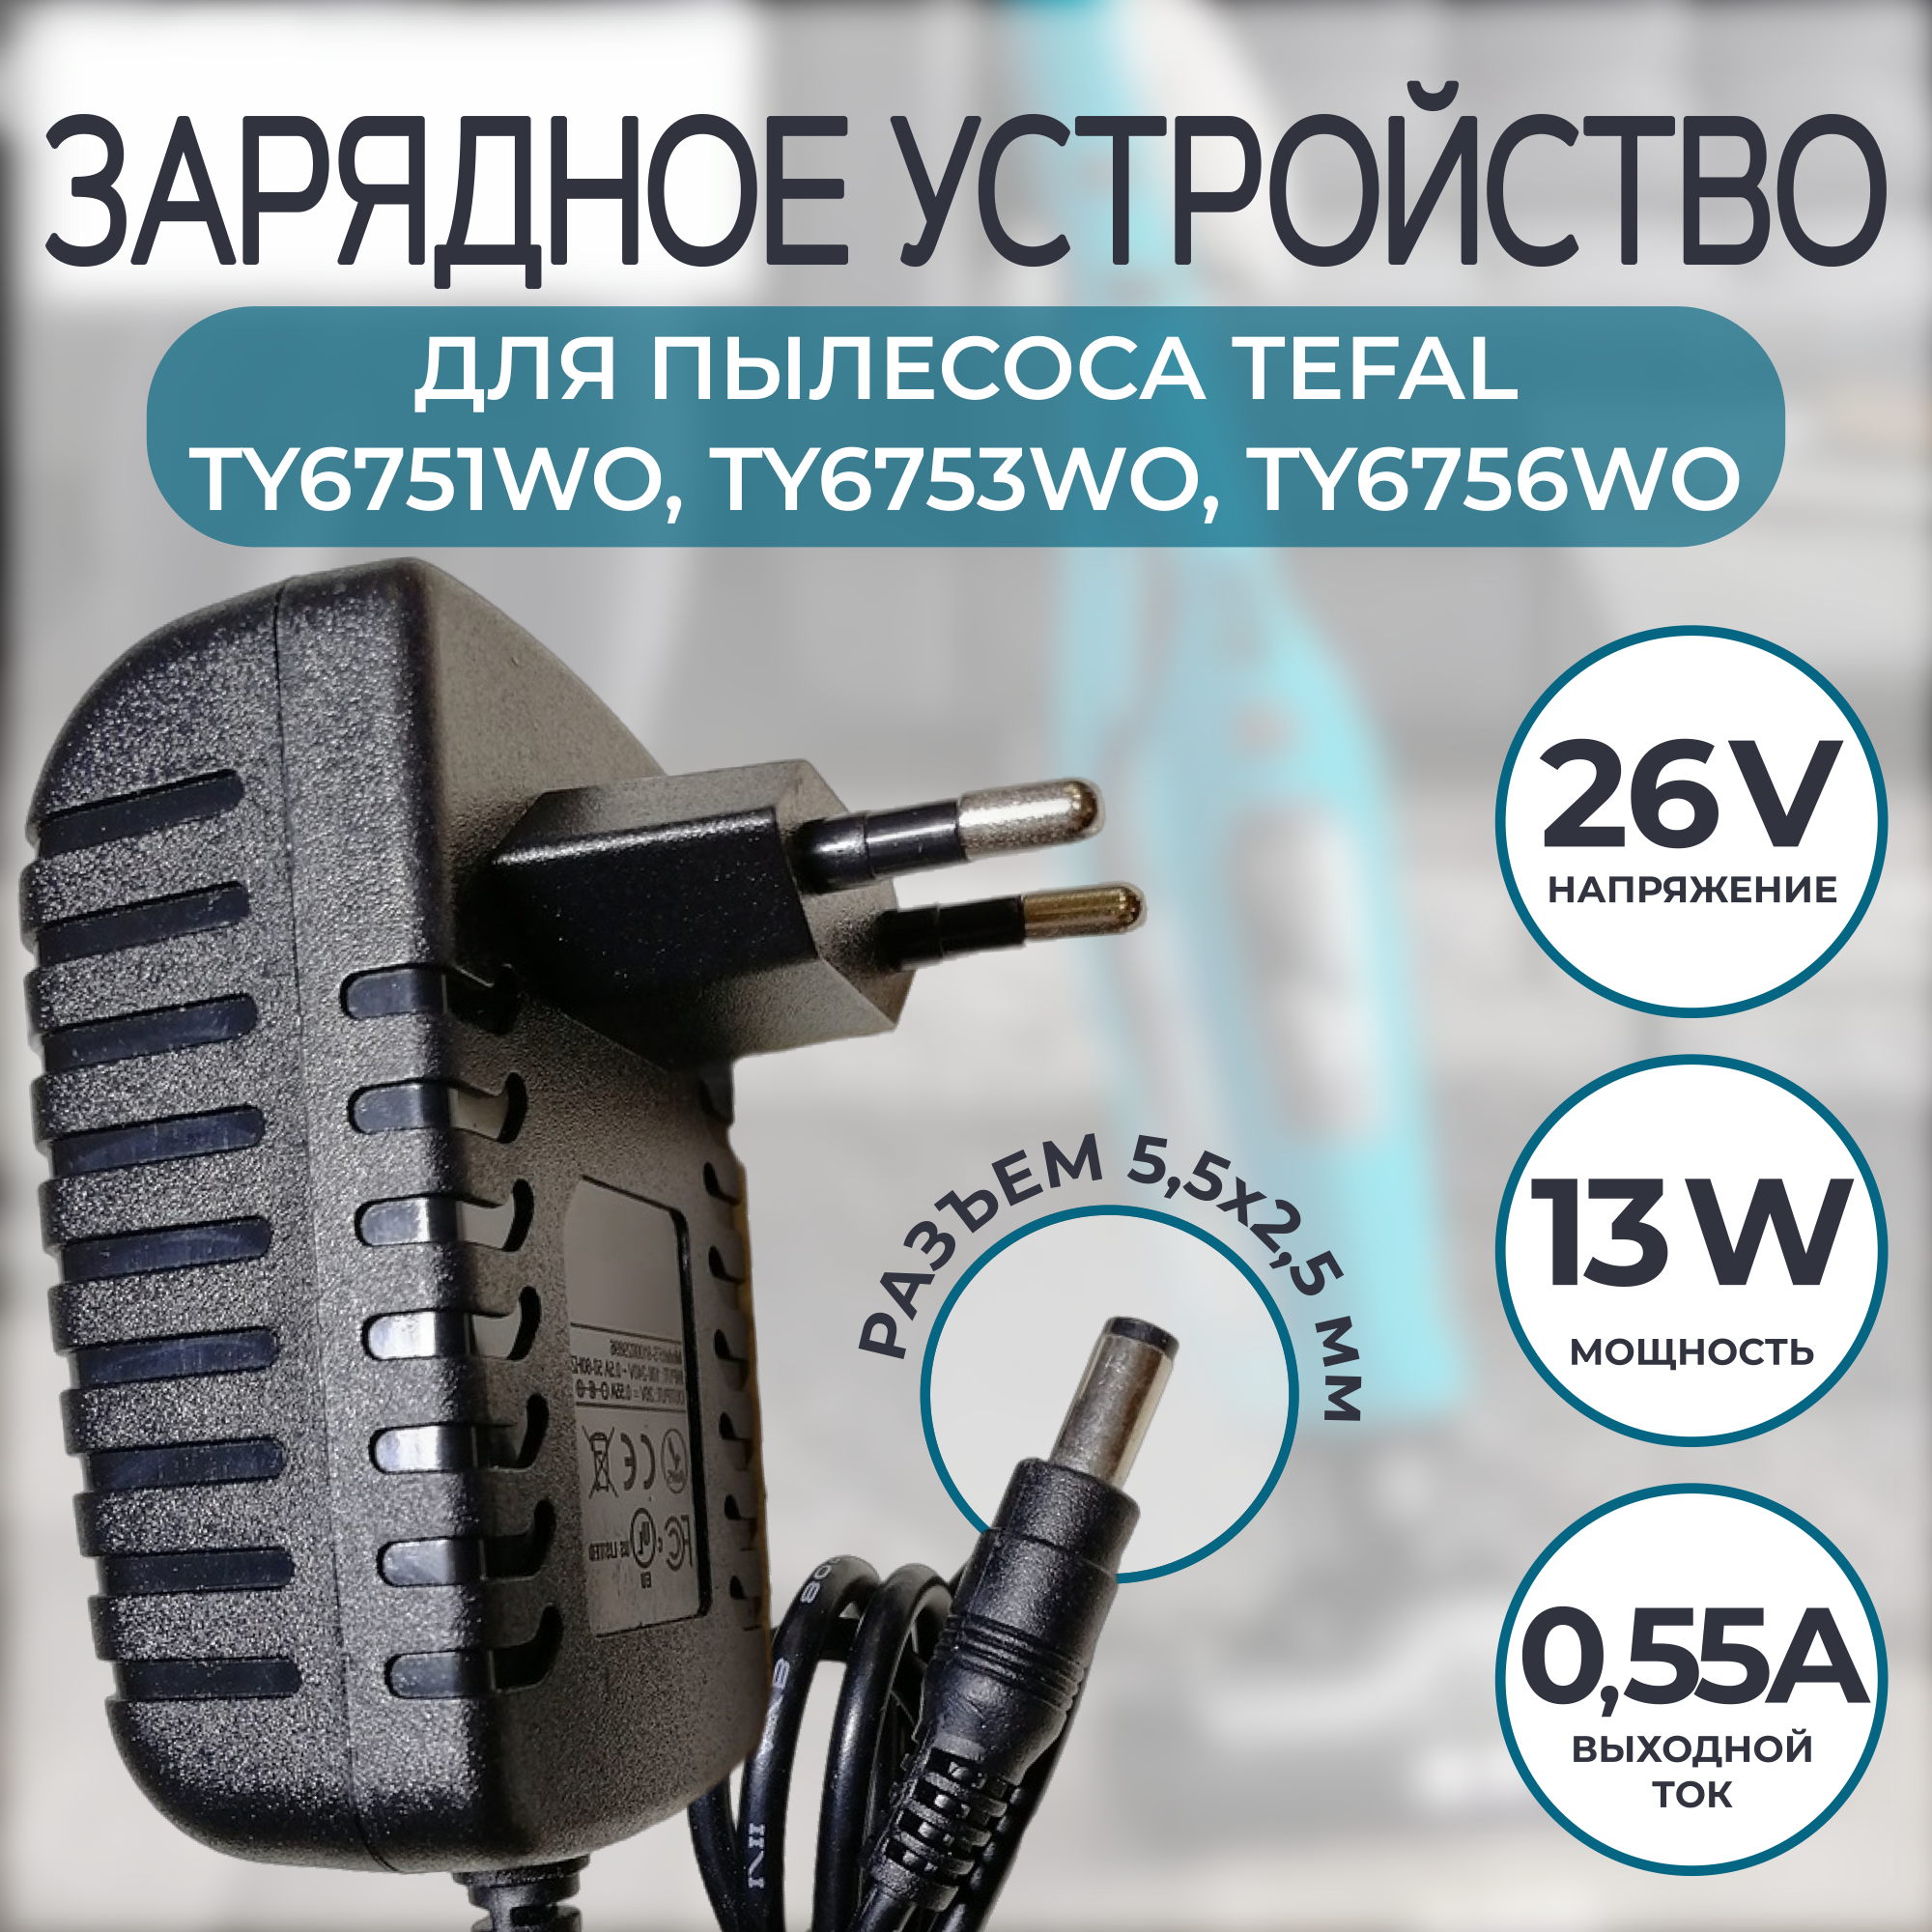 Зарядка для пылесосов Tefal, Rowenta, OBH Nordica, Trikli 26v 0.55a кабель 2 метра